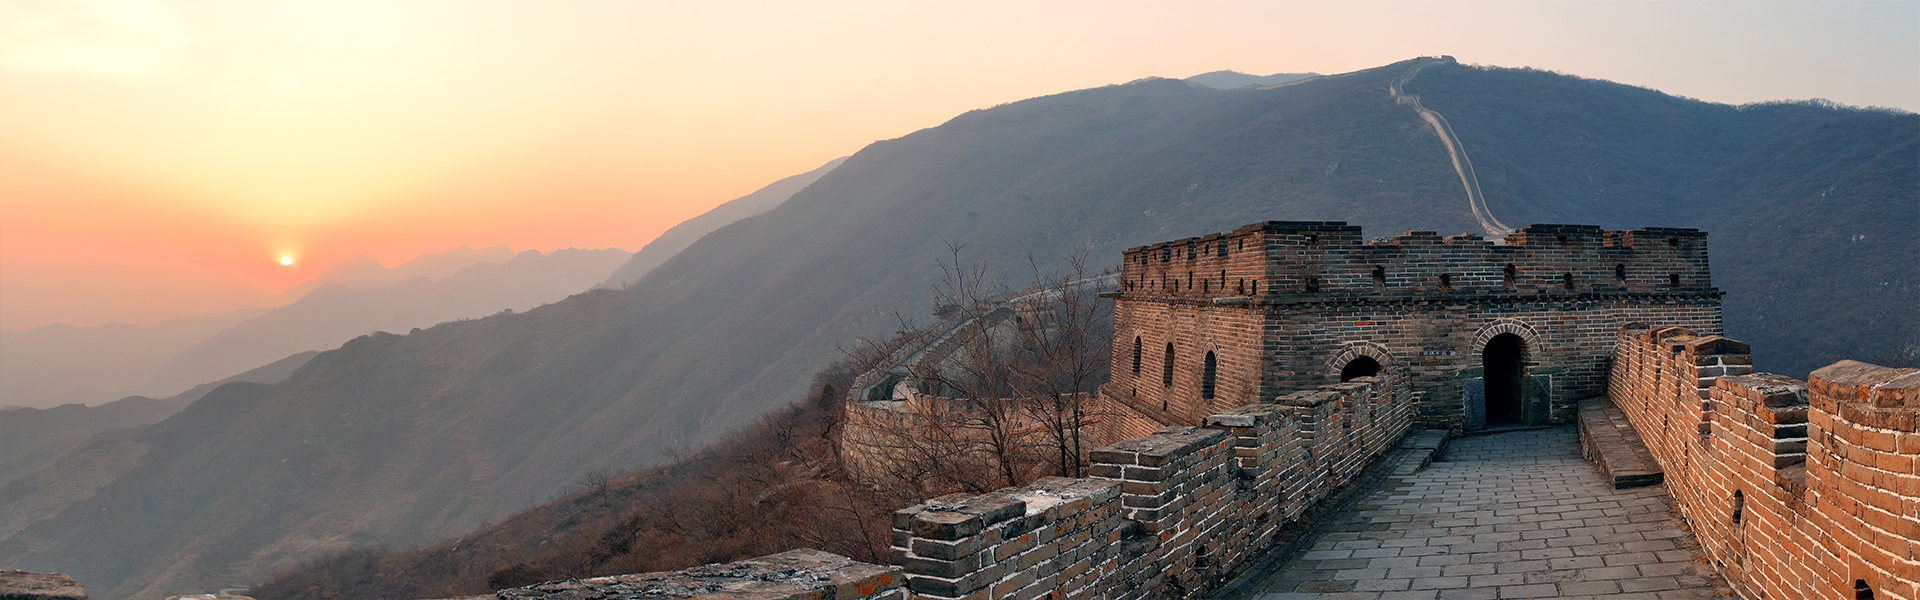 great wall sunset panorama mountains beijing china